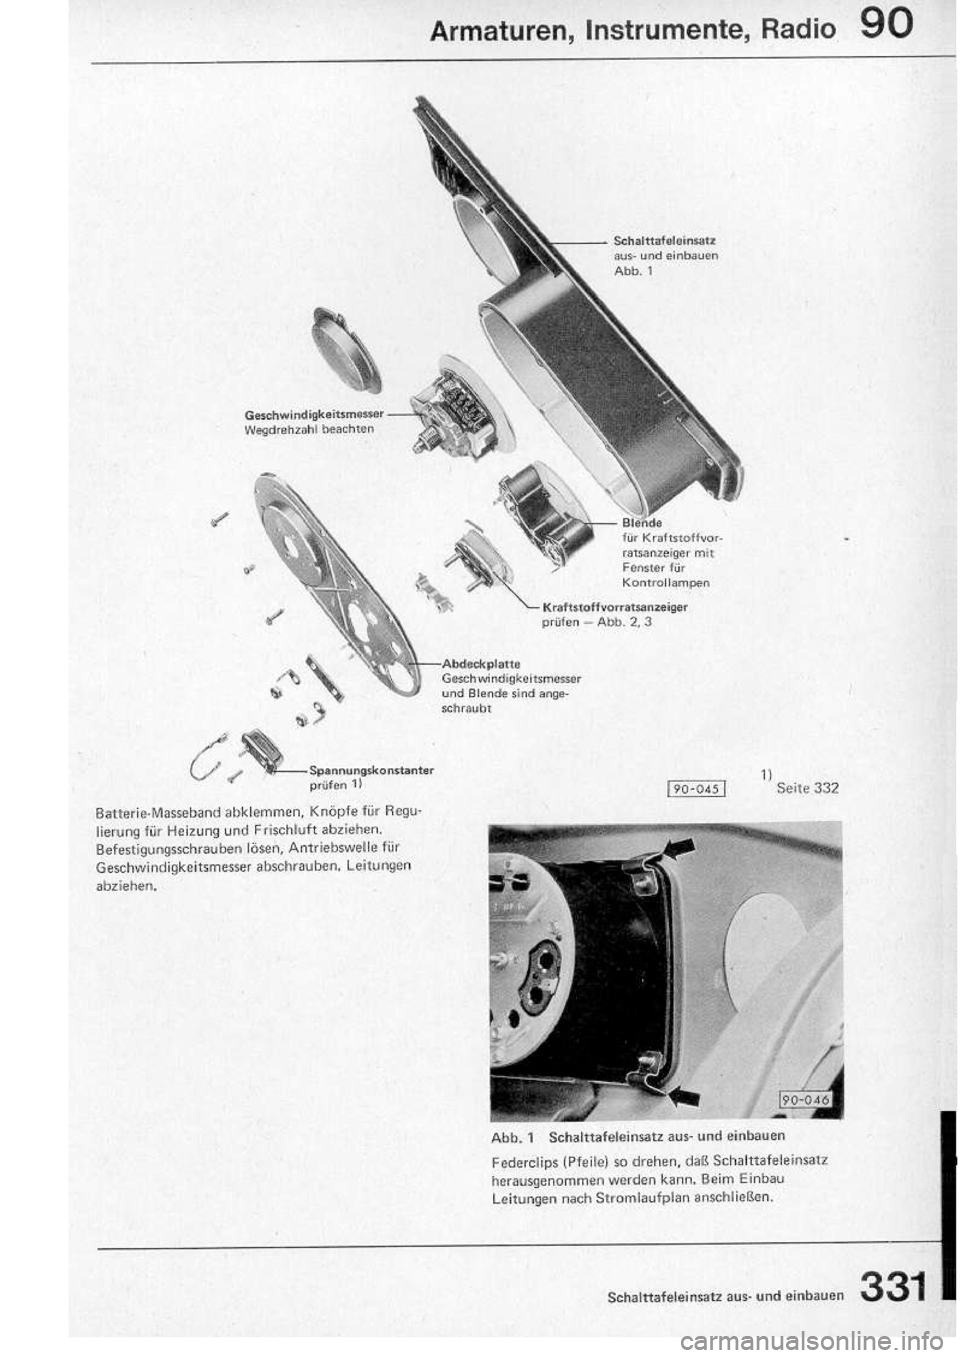 VOLKSWAGEN T2 1975  Repair Manual 
http://vwbus.dyndns.org/bulli/michaelk/vw_bus_d/rlf/10/331.jpg 